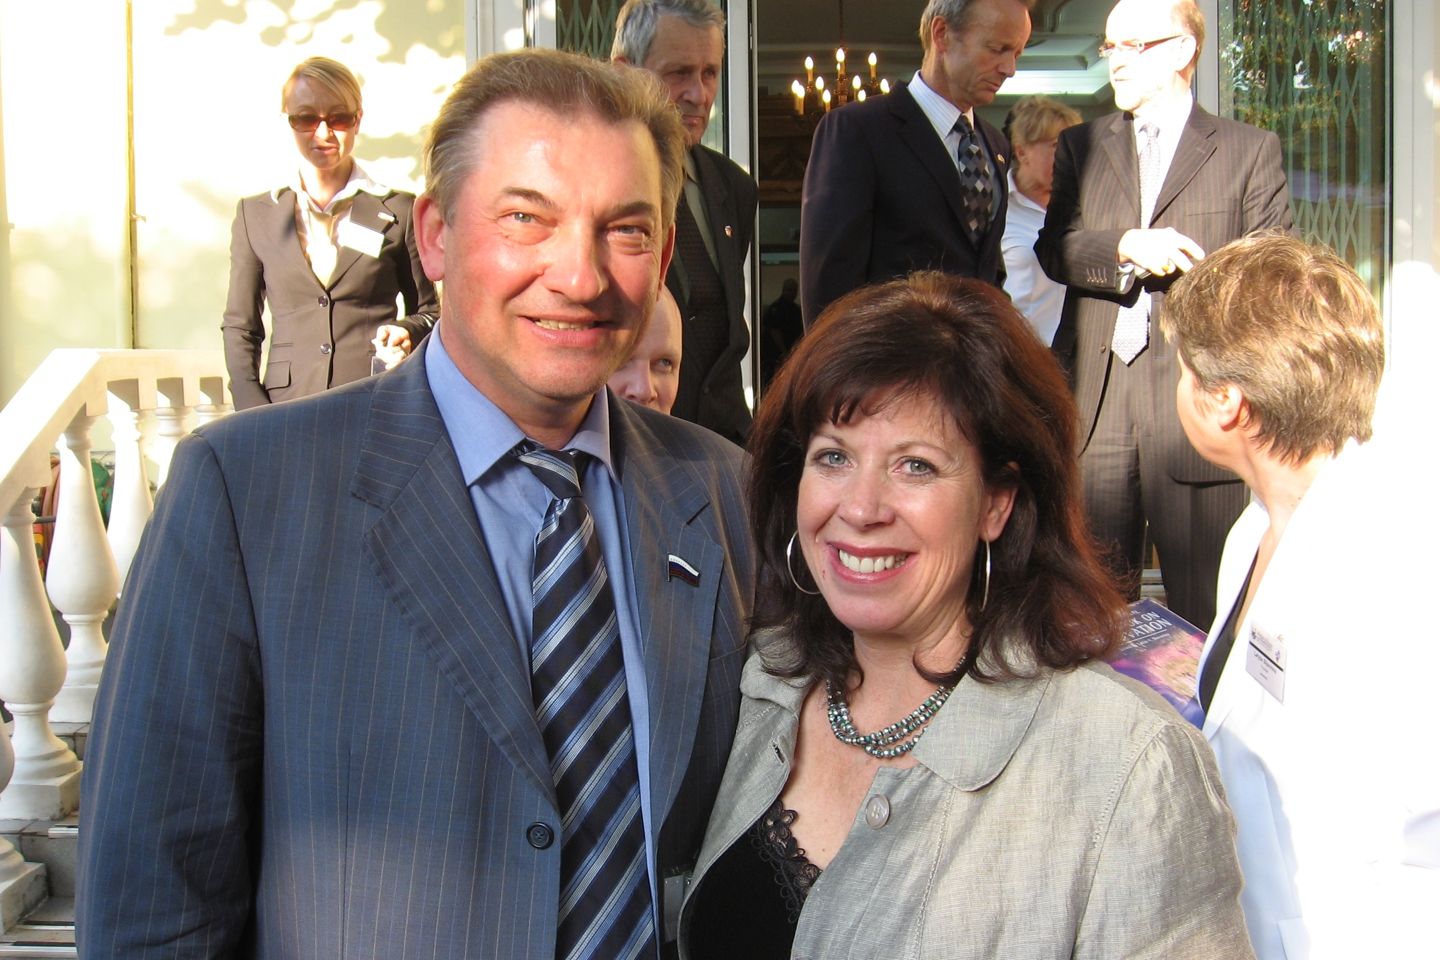 Photo with the famous Vladislav Tretiak, Canadian Embassy 2009